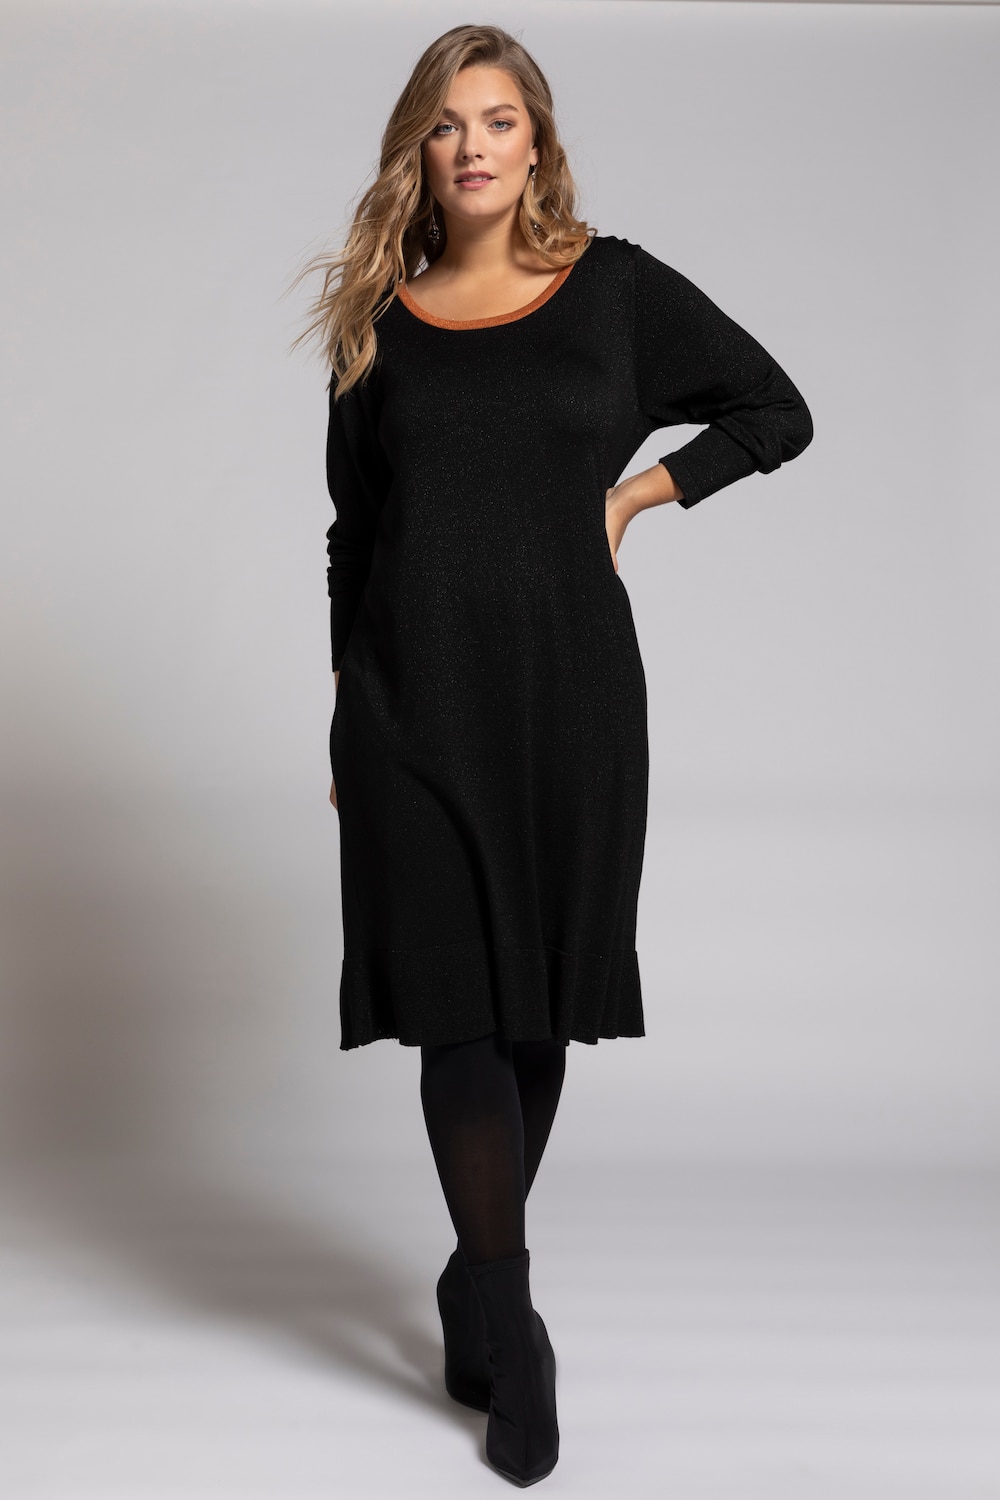 Plus Size Glitter Effect Contrast Round Neck Sweater Dress, Woman, black, size: 24/26, viscose/metallic fibers/synthetic fibers, Ulla Popken